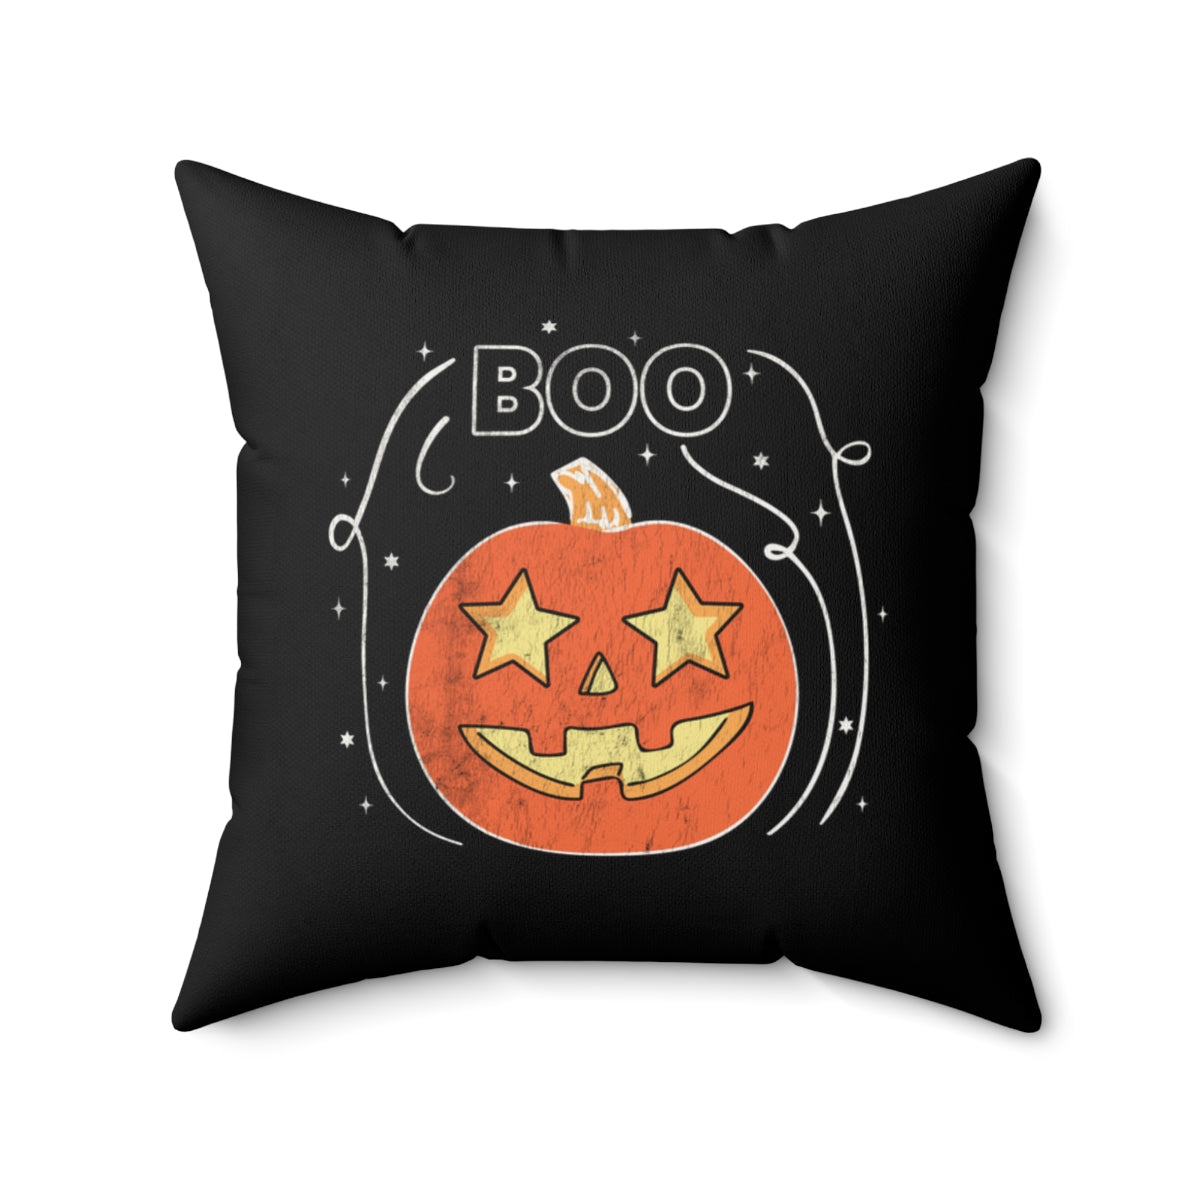 Starry Eyed Jack-o-lantern Pillow Cover / Halloween / Black